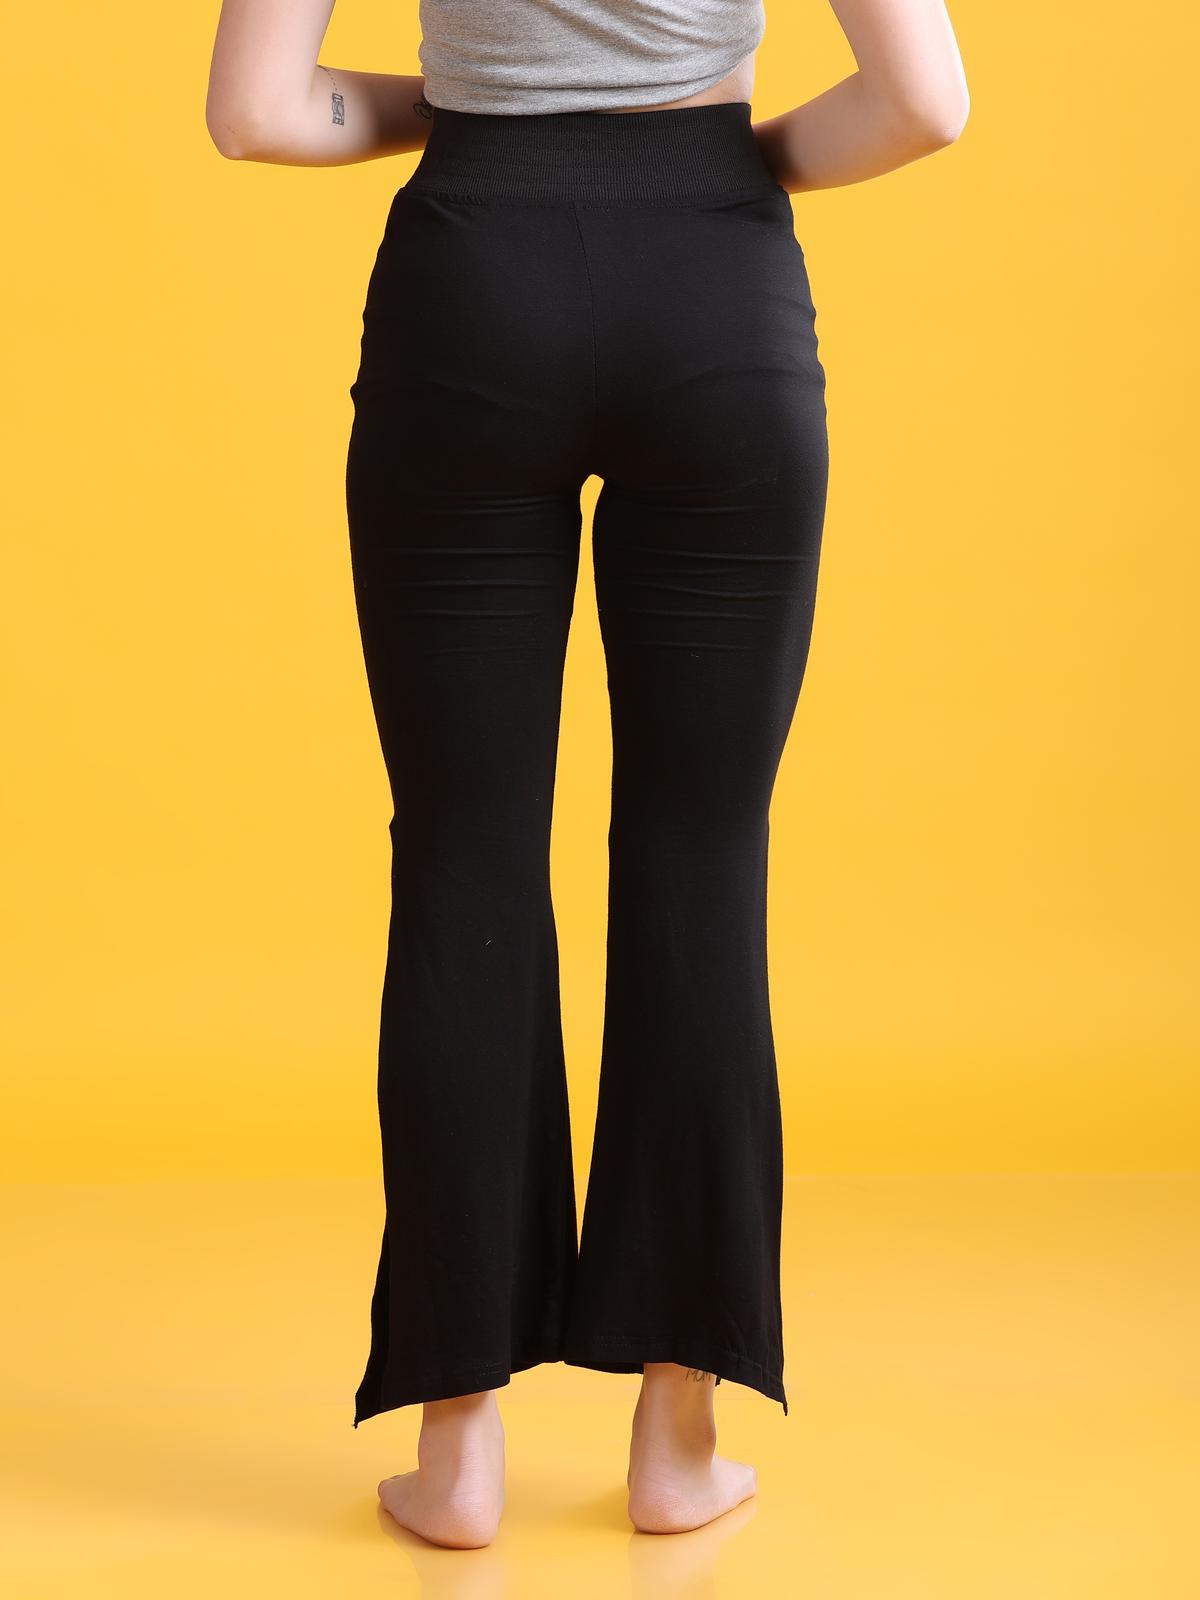 Women Black Cotton Side Slit Pants with Flared Bottom for Dance